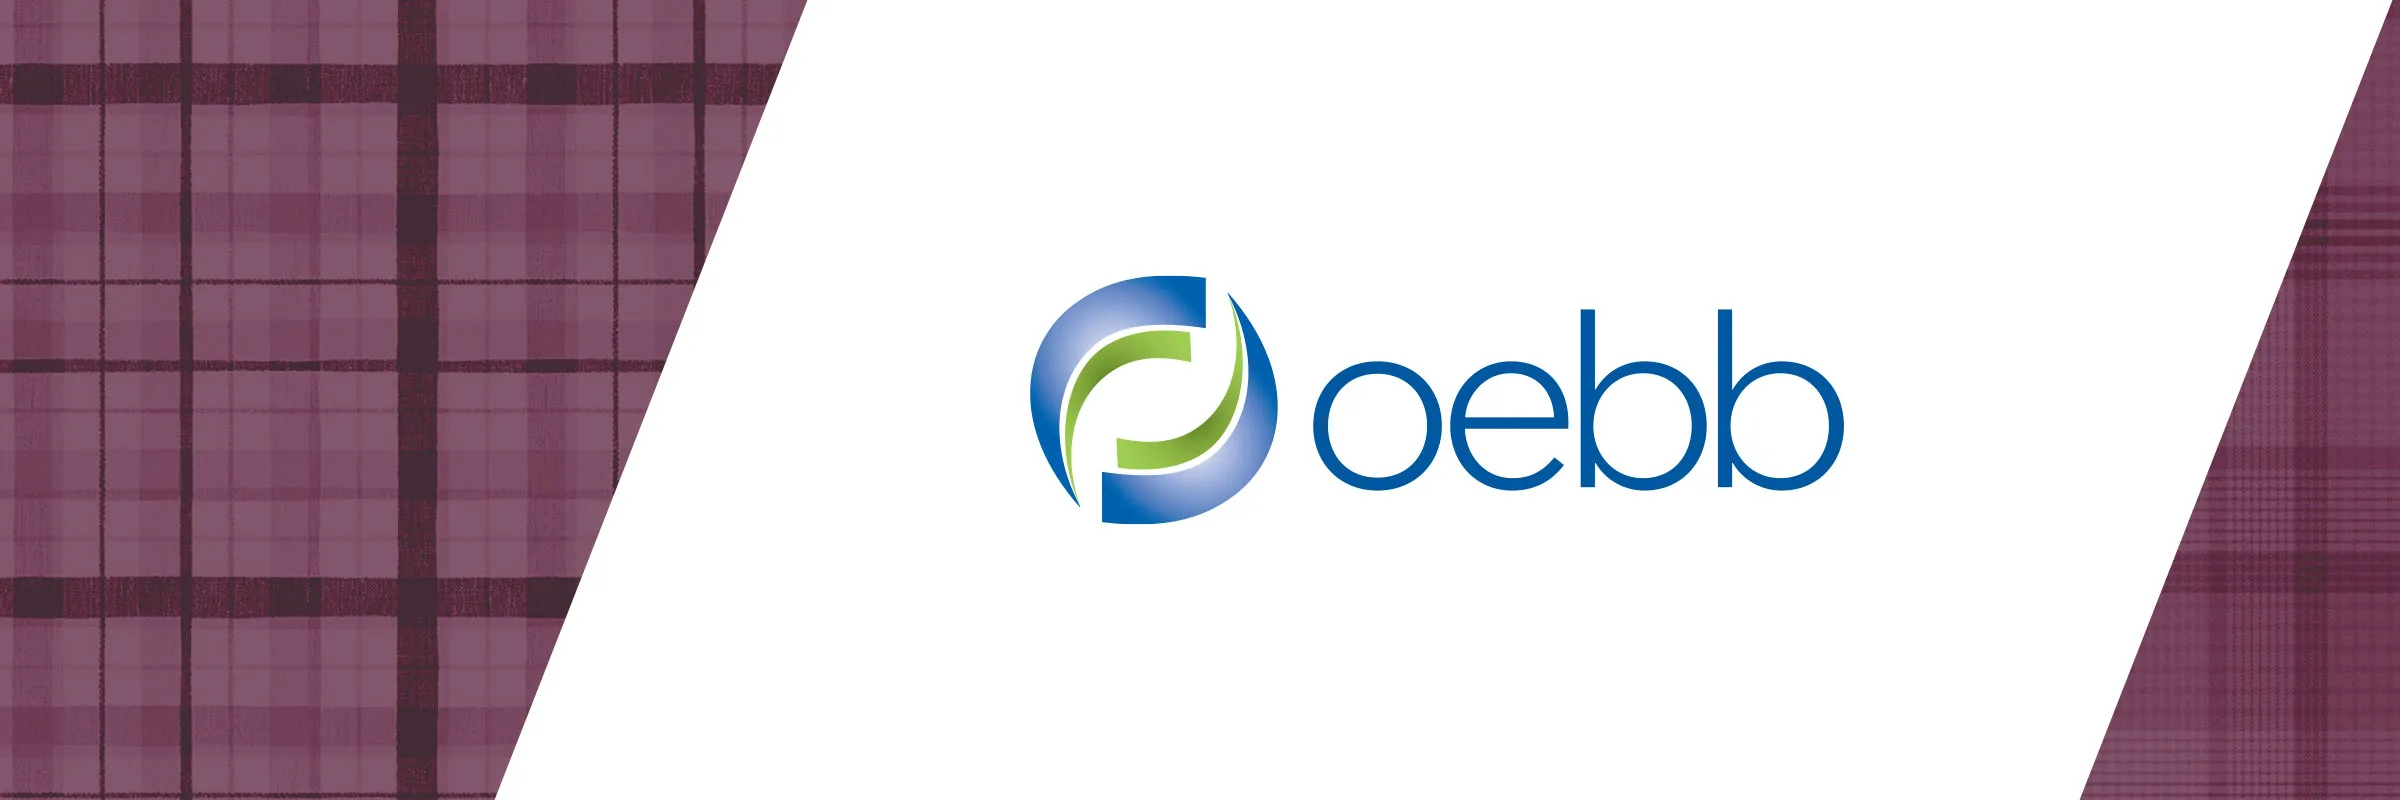 OEBB hero image and logo